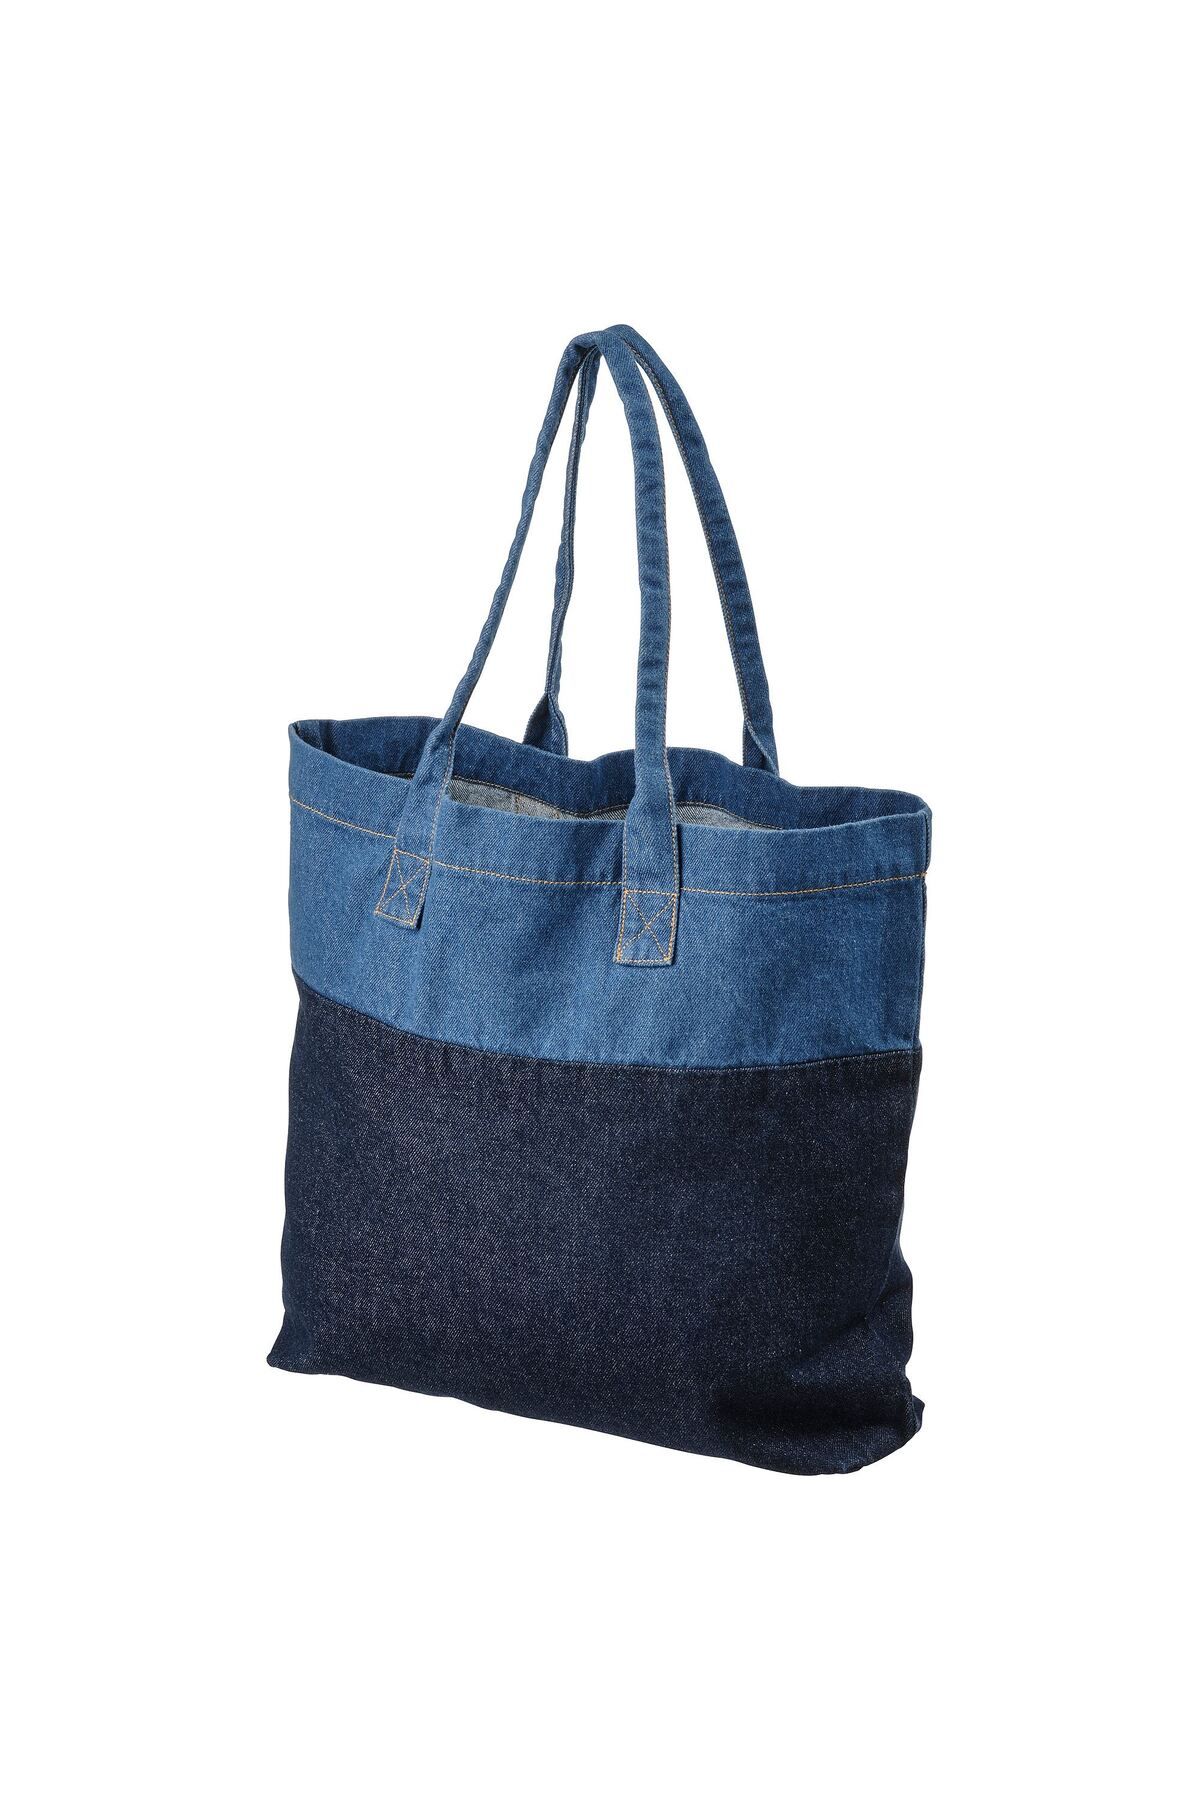 IKEA MÄVINN çanta, mavi, 34x35 cm